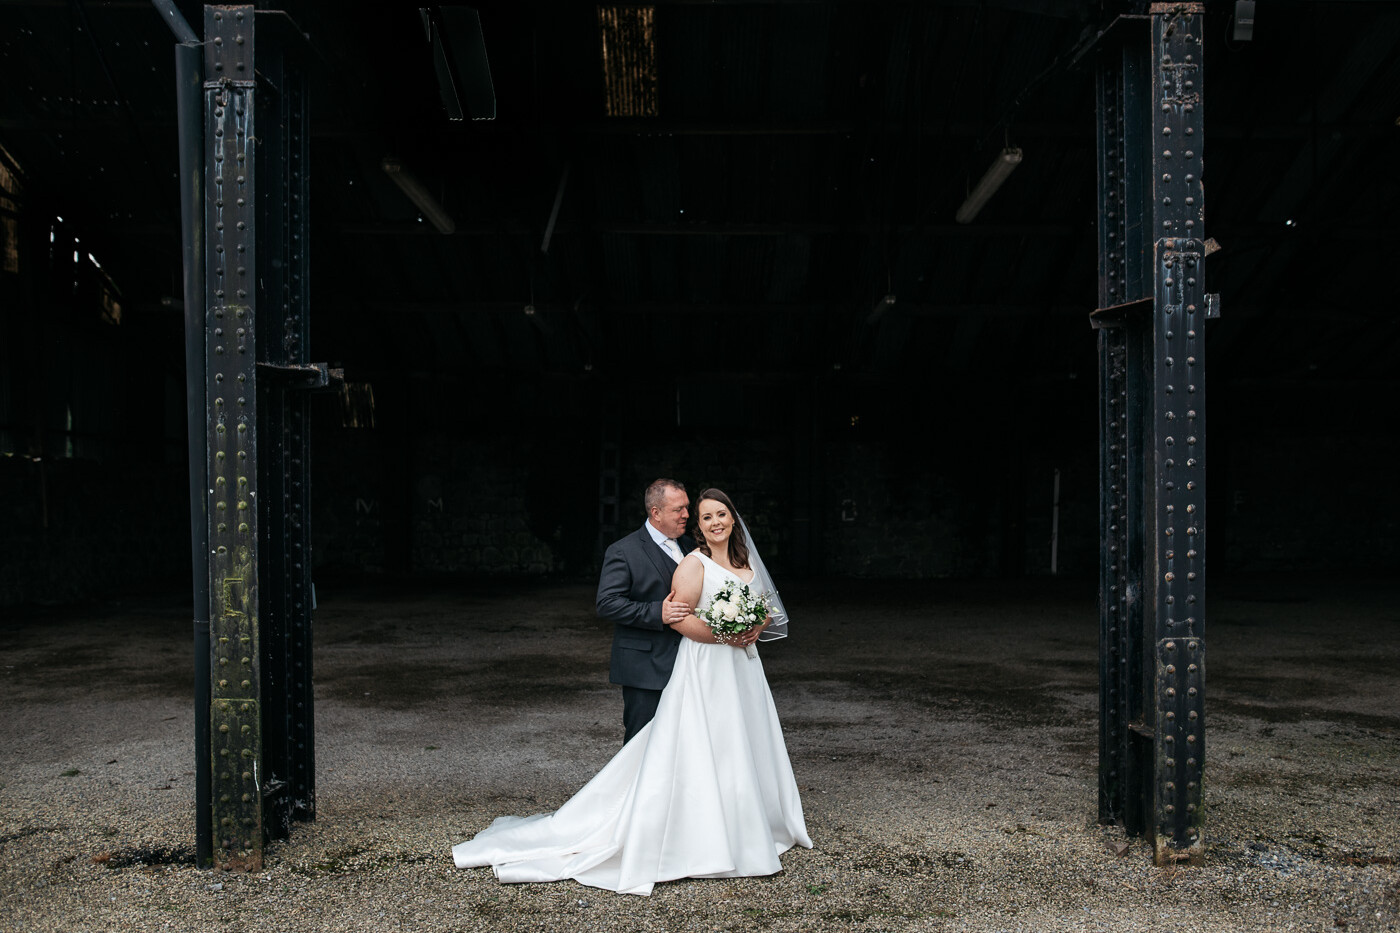 Wedding photographers in Dublin 13 12 2021 16